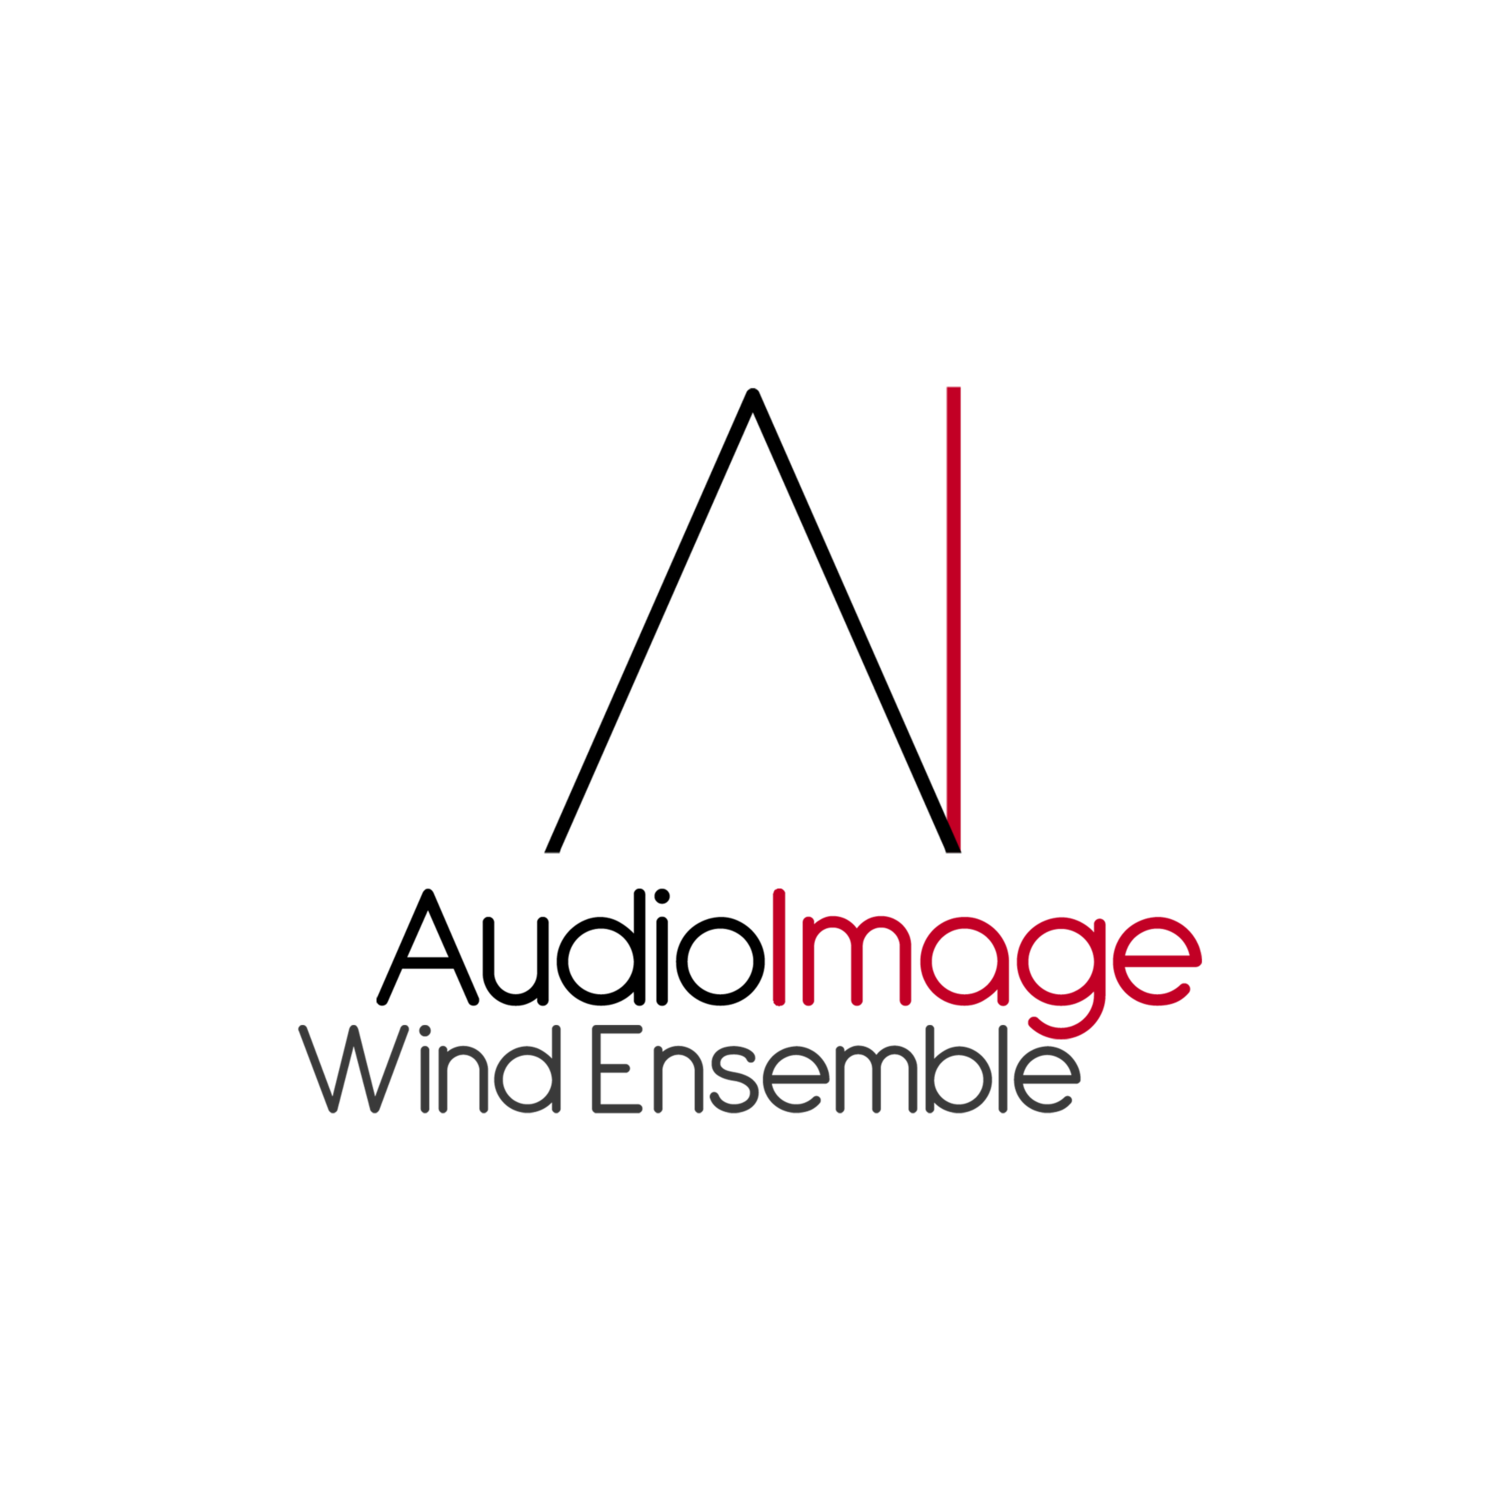 The ensemble audioimage. Concert clipart wind band